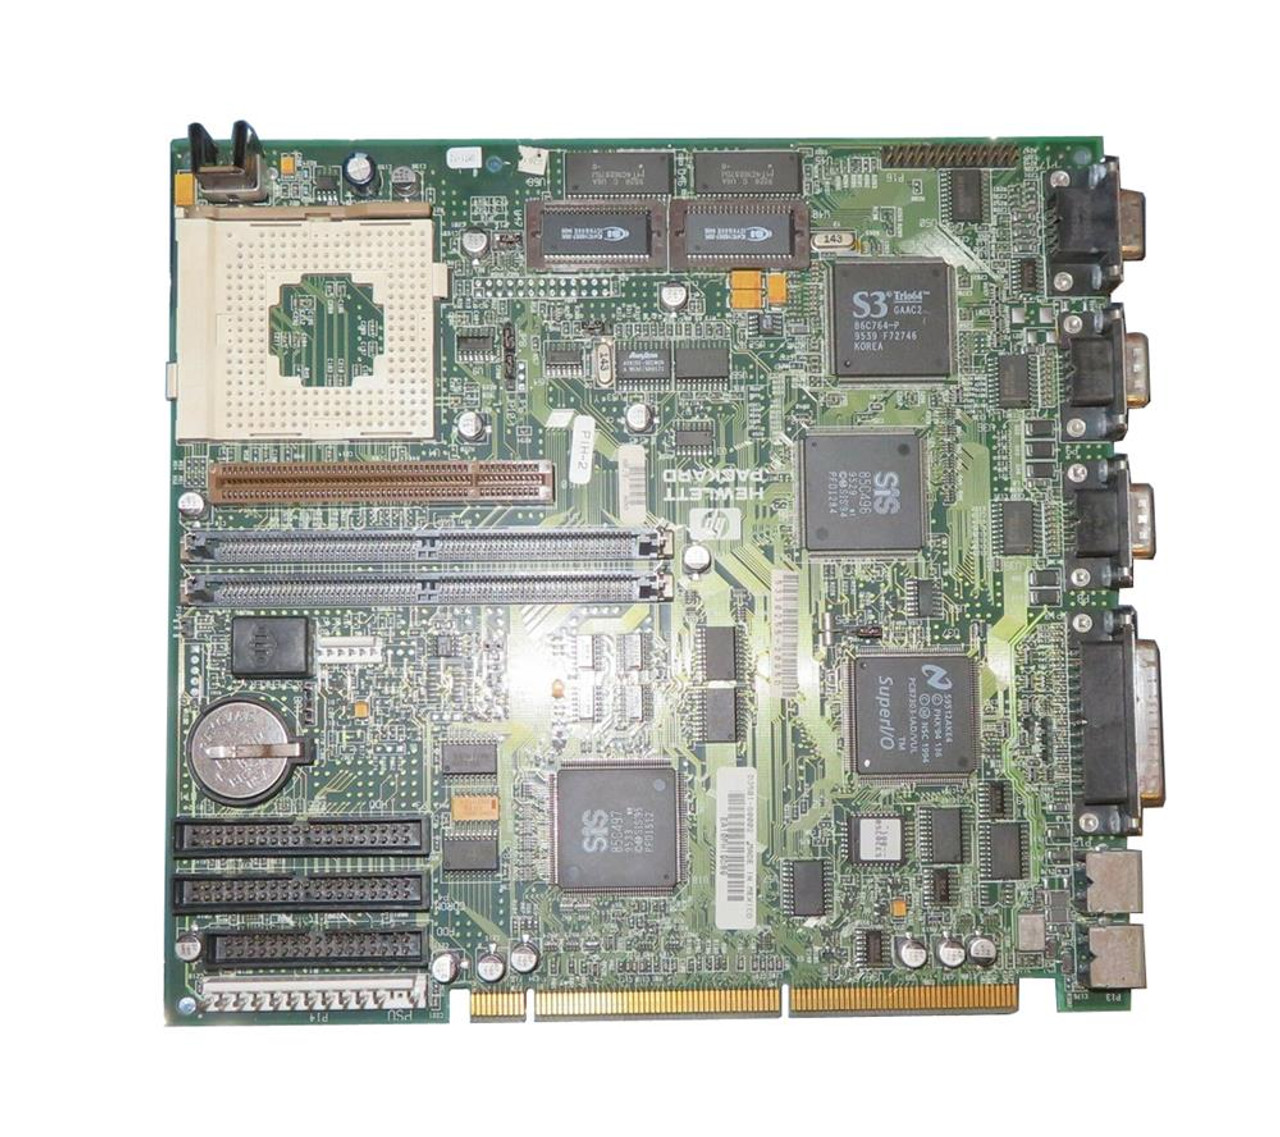 D3501-60002 HP System Board (Motherboard) for Vectra Ve (Refurbished)